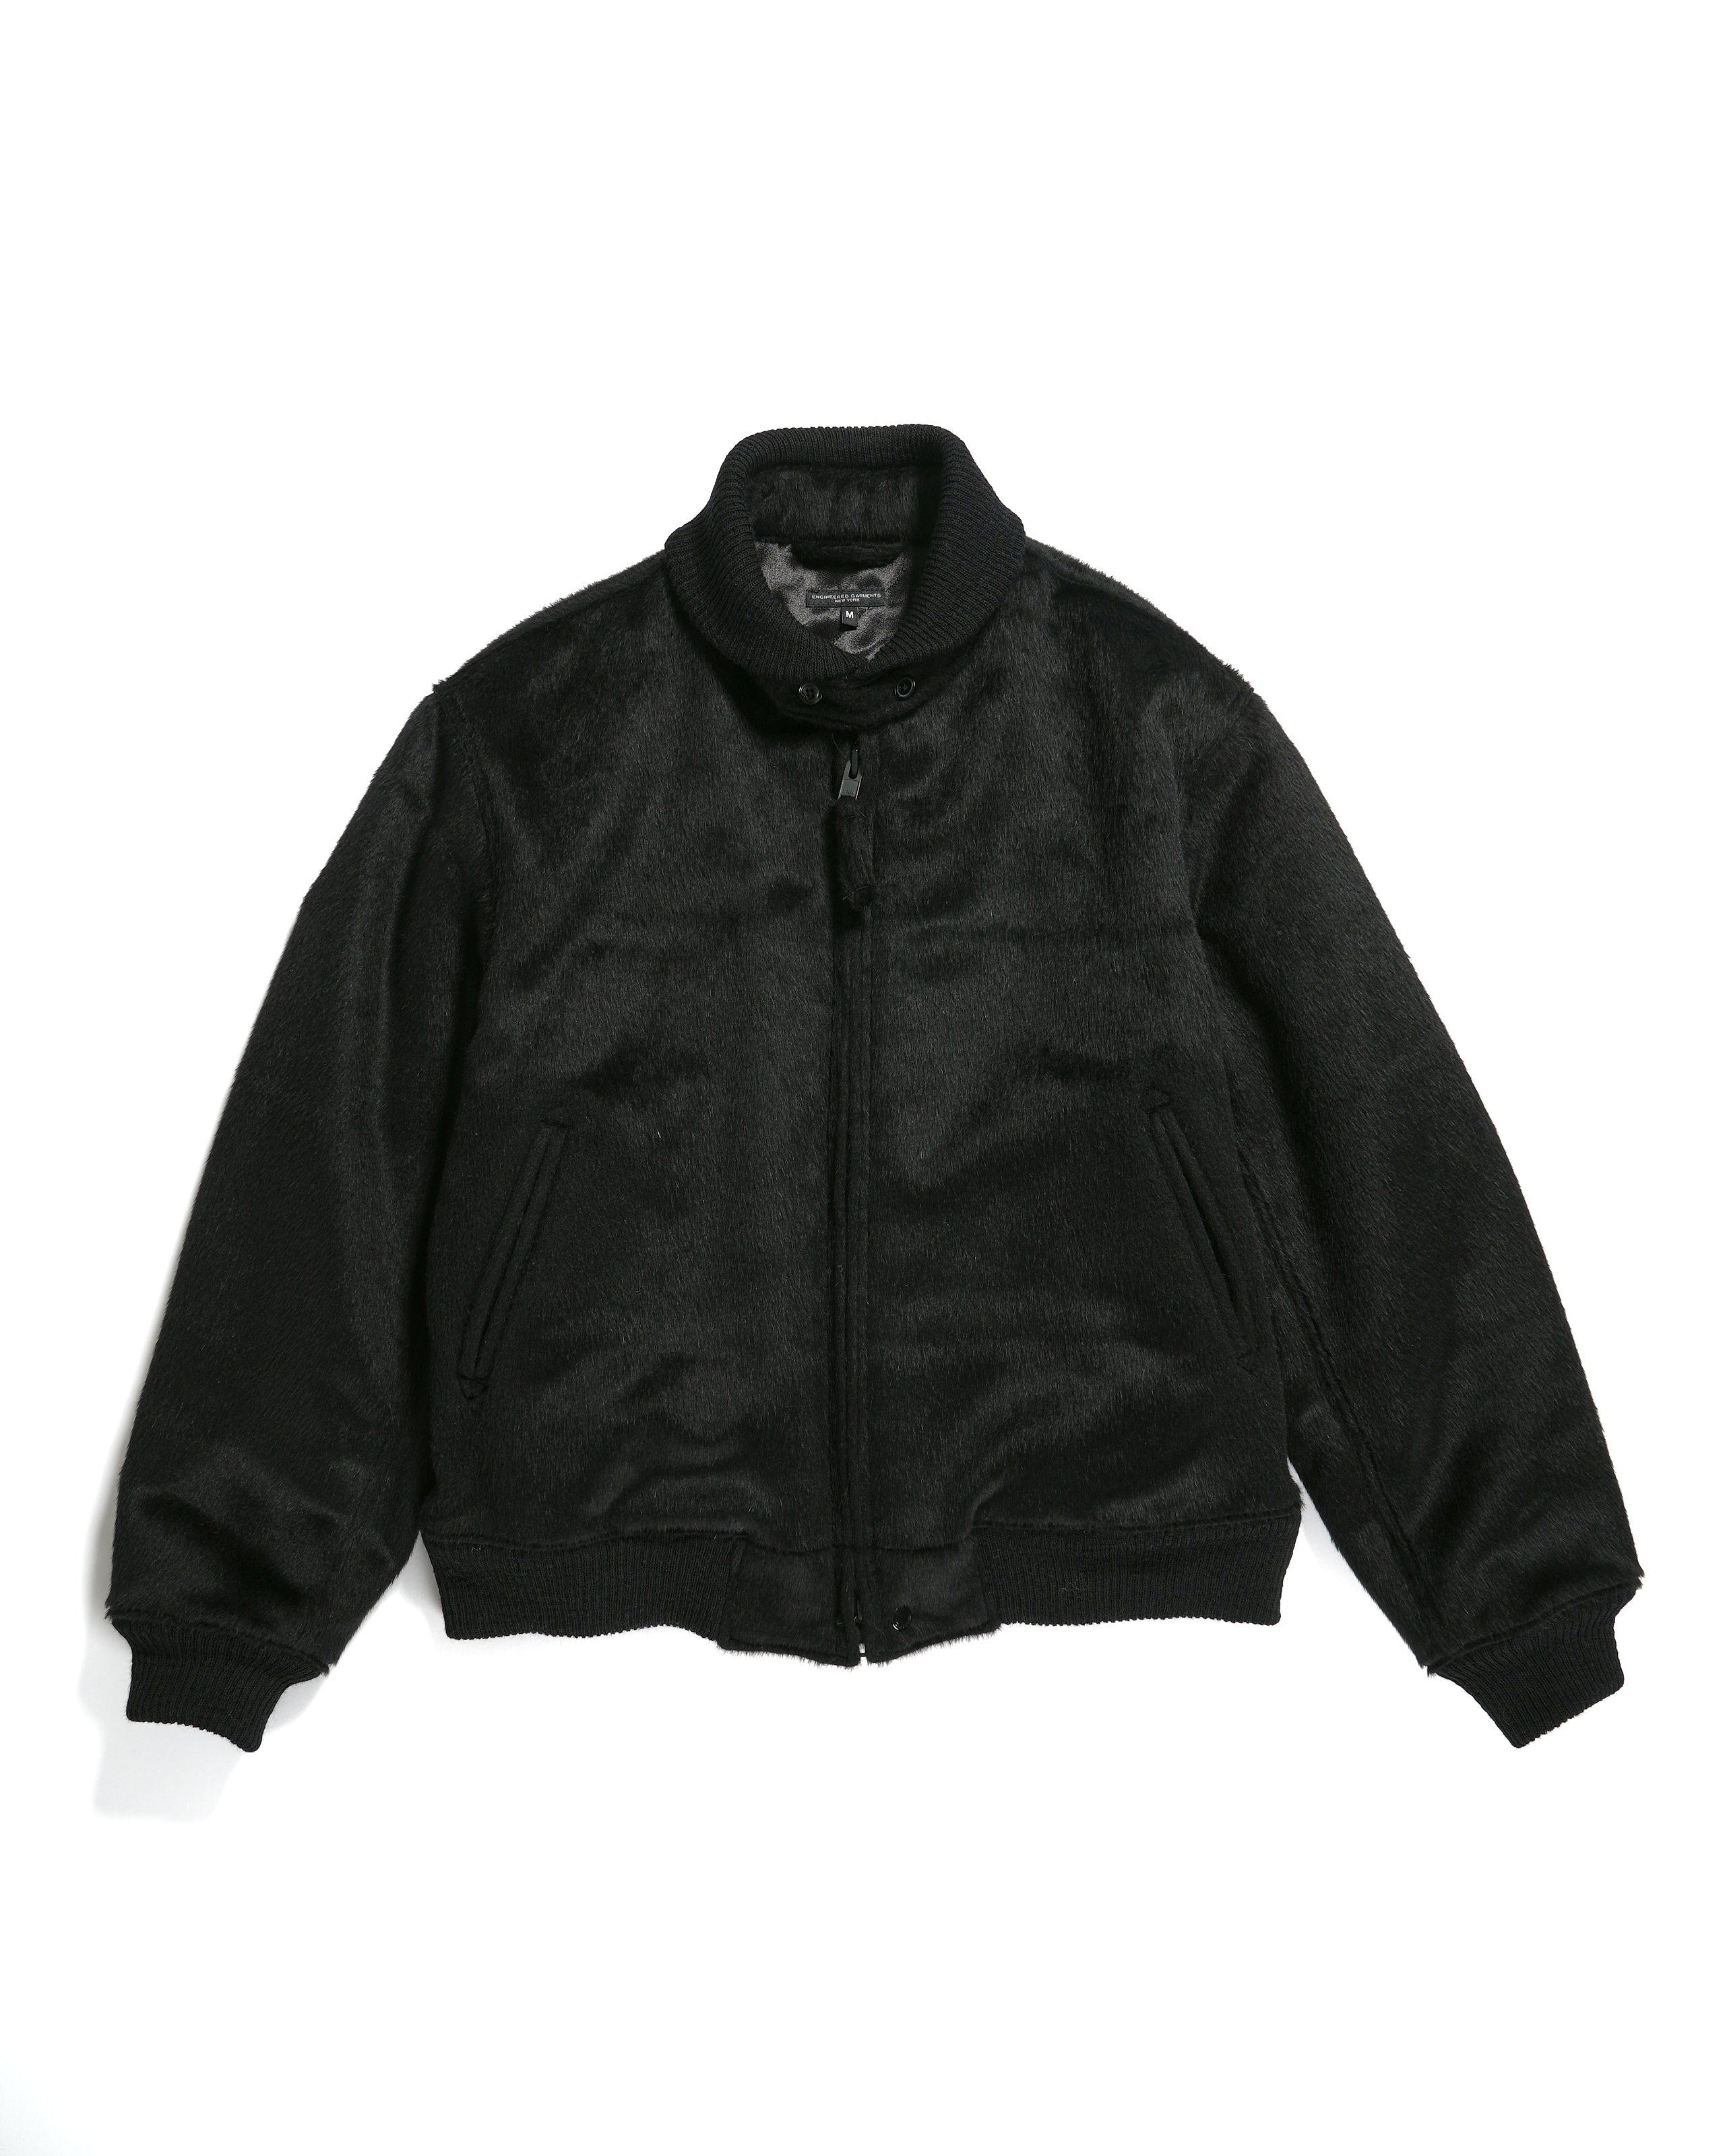 LL Jacket - Black Polyester Wool Shaggy